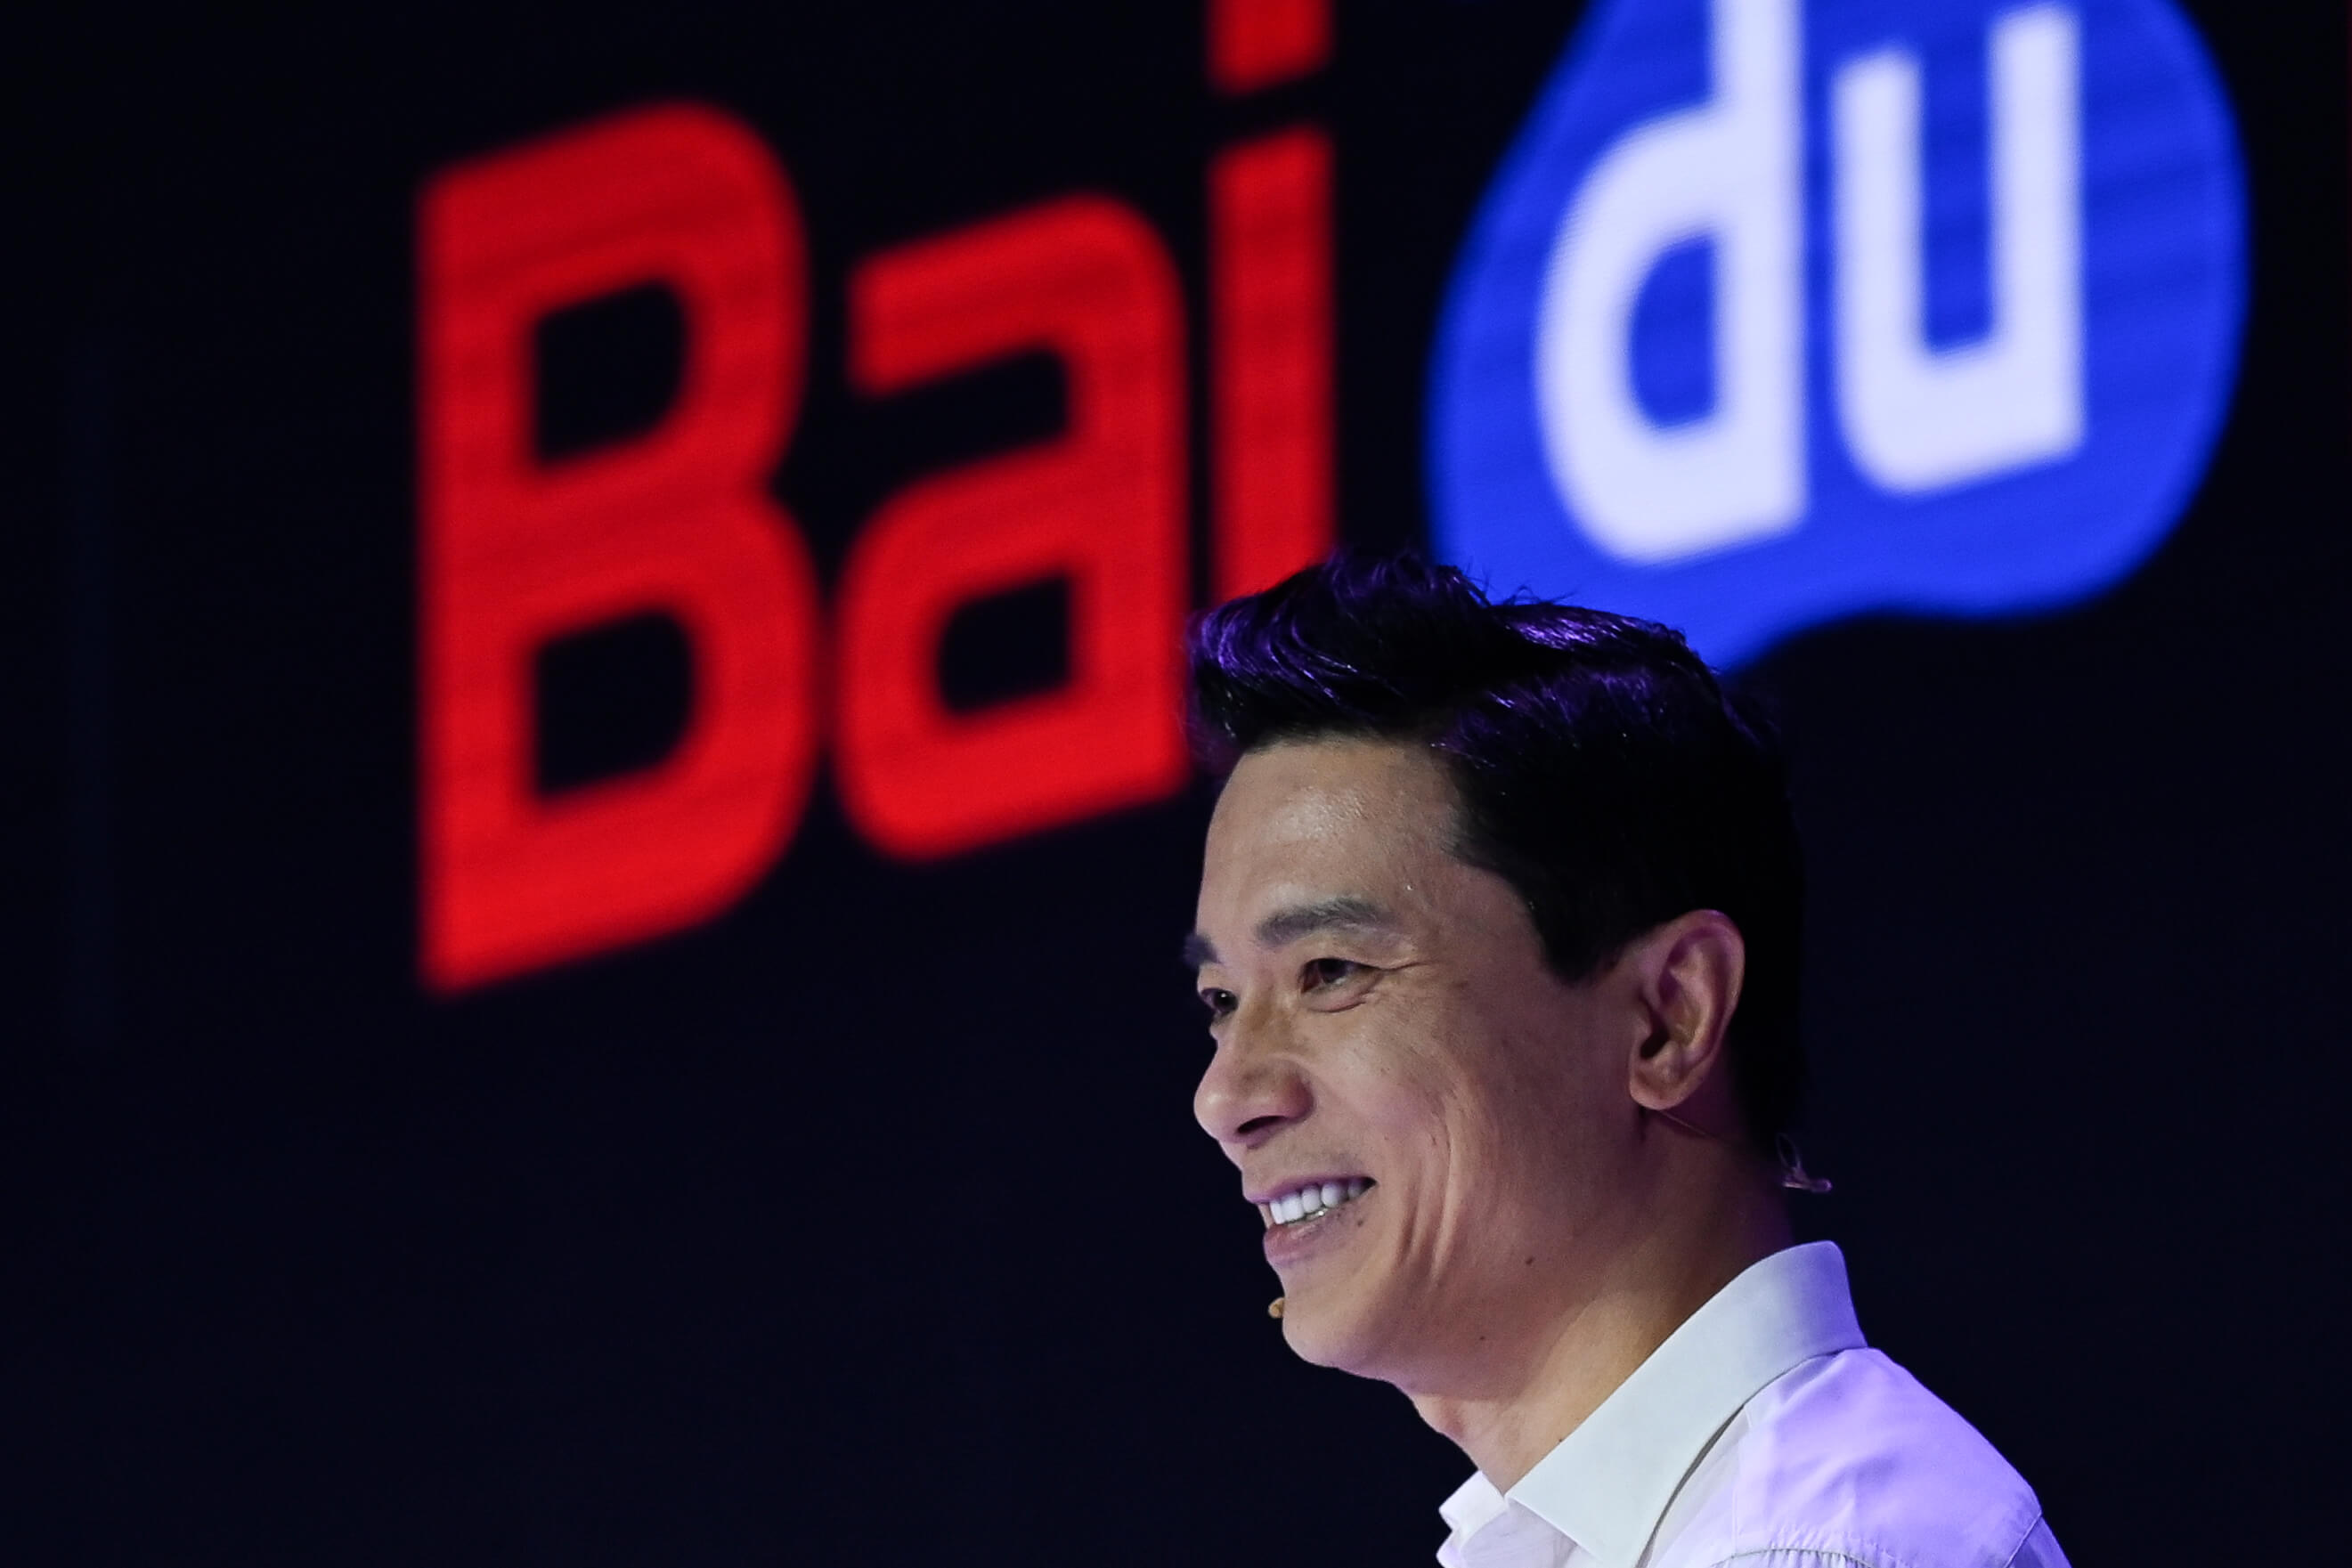 Baidu co-founder and CEO Robin Li attends Baidu Create 2019 in Beijing